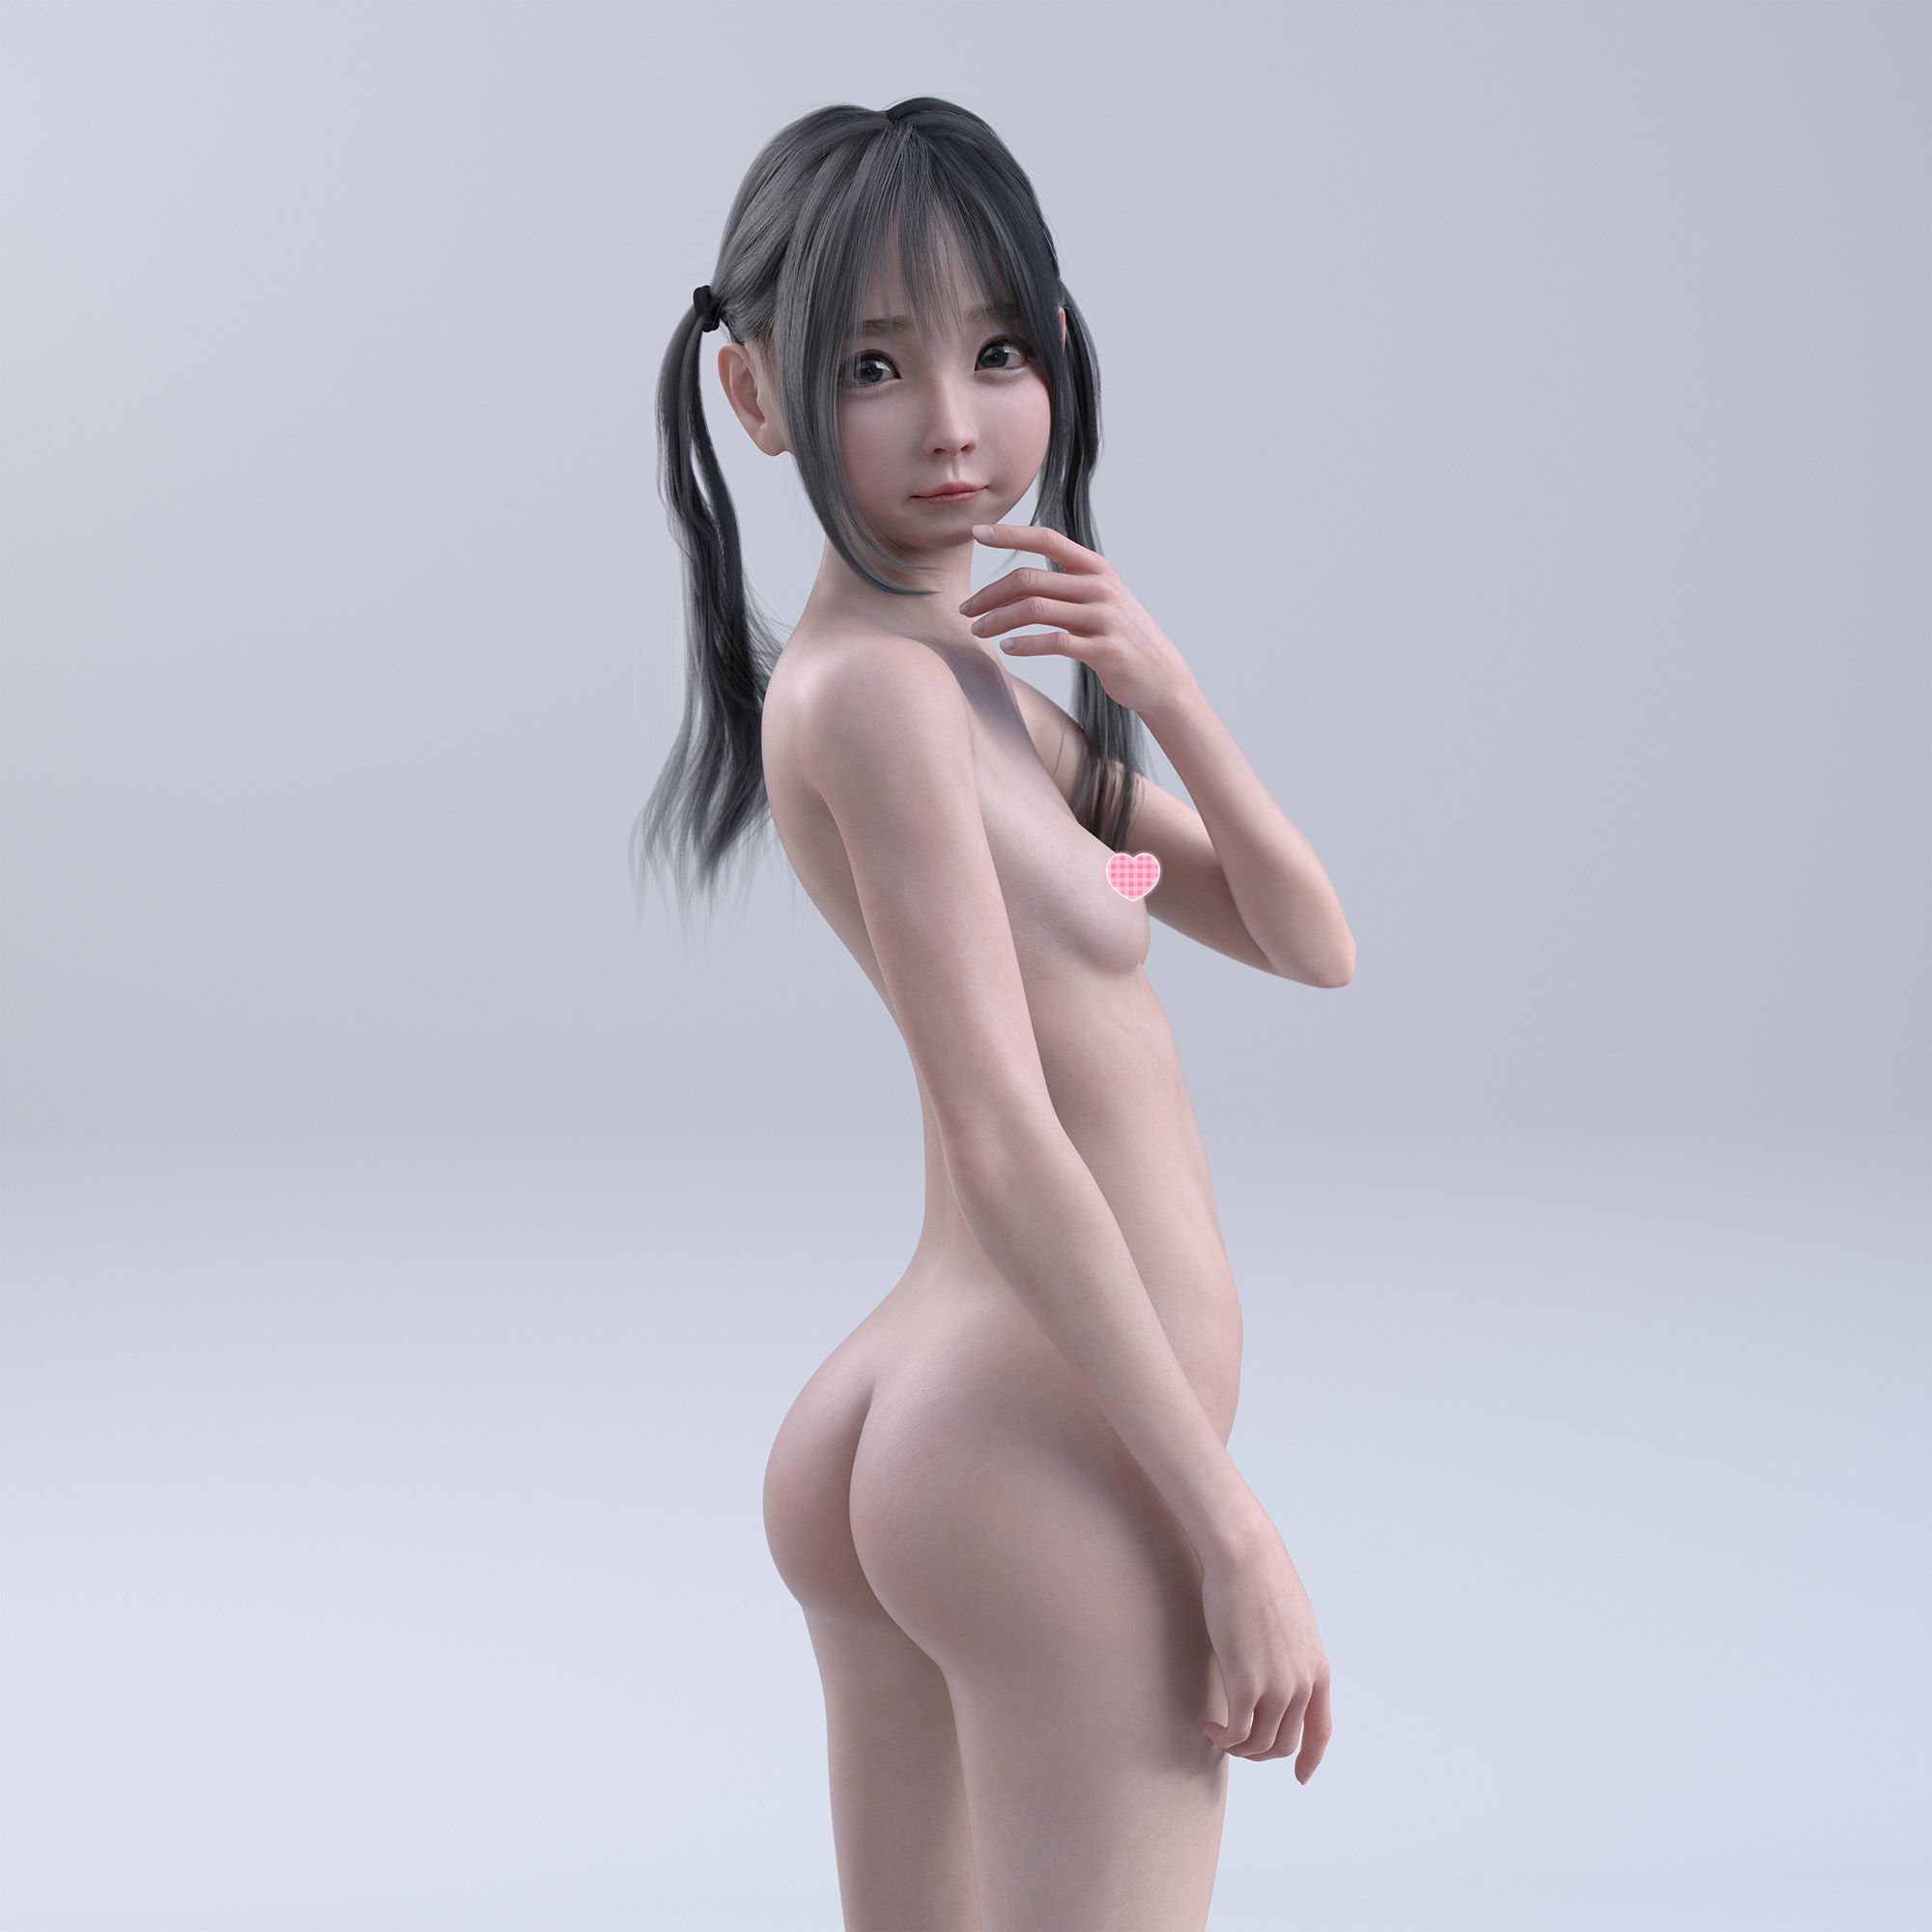 SWEET MEMORY - nude photo book - Model MIYU Vol.3【スイートメモリー ヌードフォトブック】_7